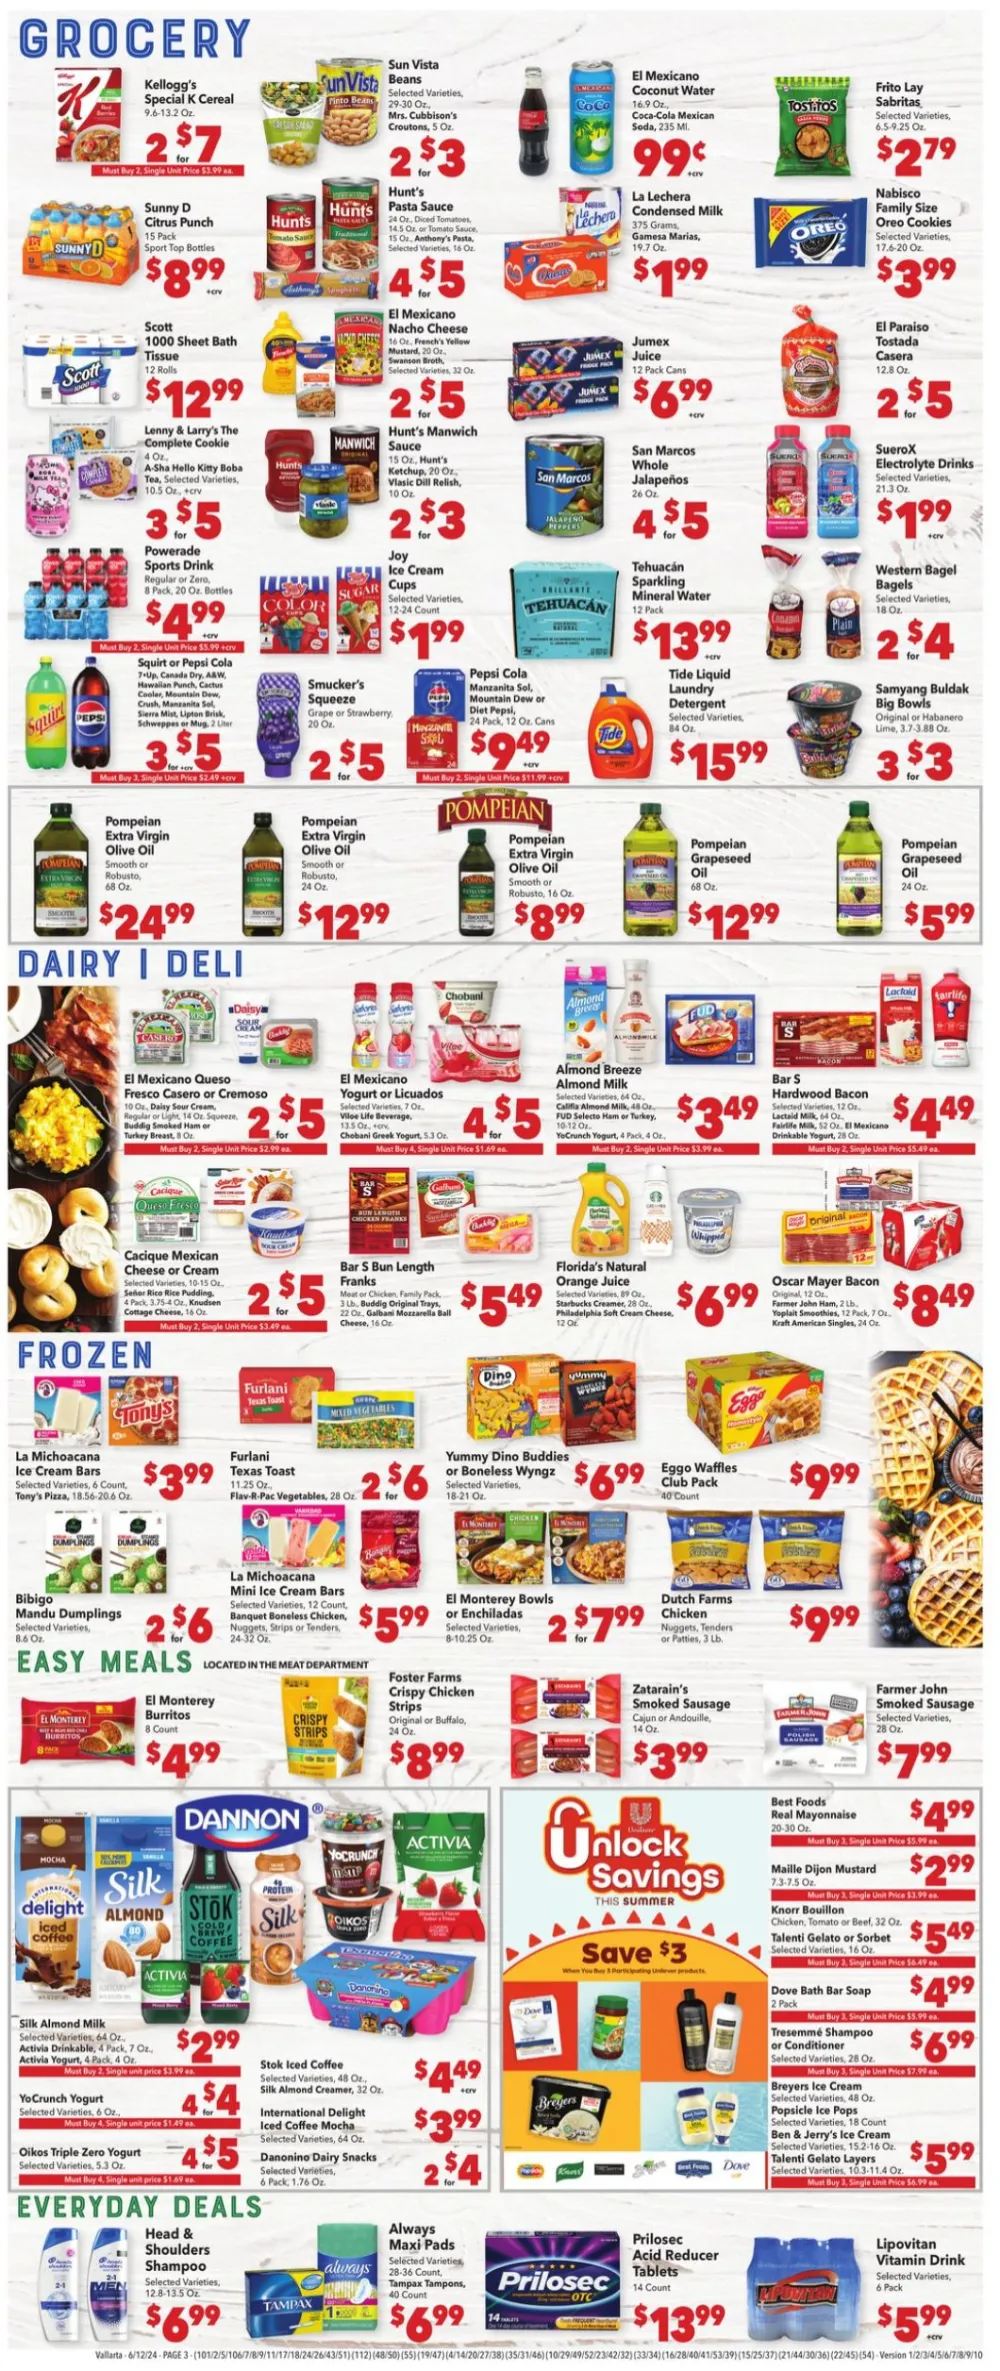 Vallarta Weekly Ad July 2024 Weekly Sales, Deals, Discounts and Digital Coupons.